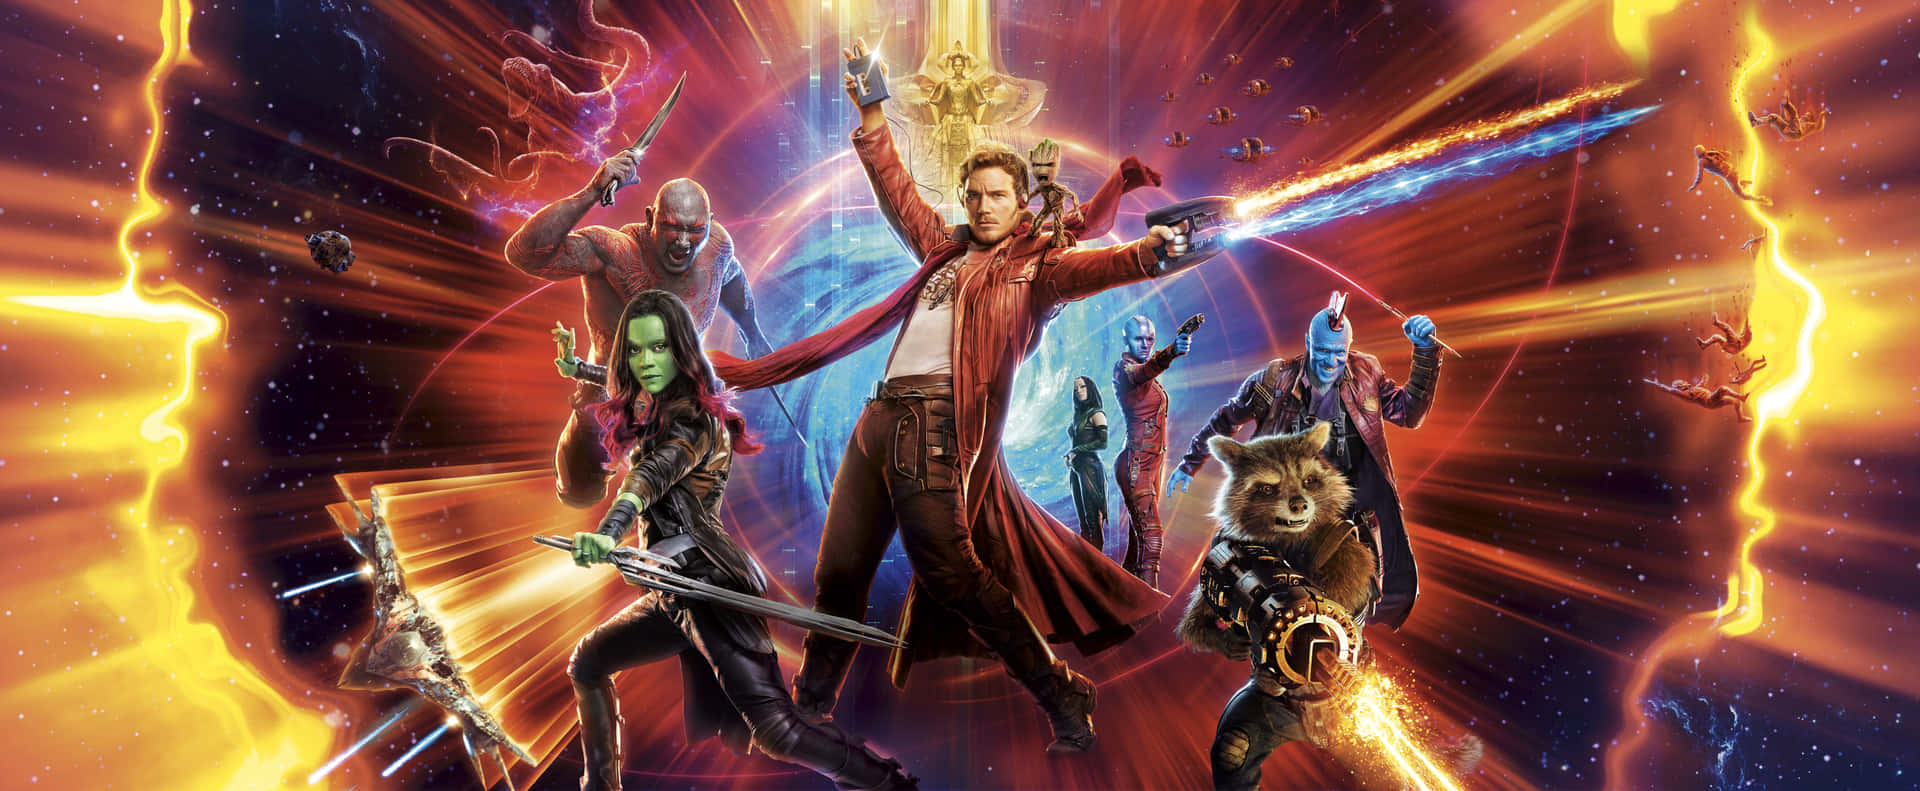 Guardians Of The Galaxy Vol 2 Poster Wallpaper